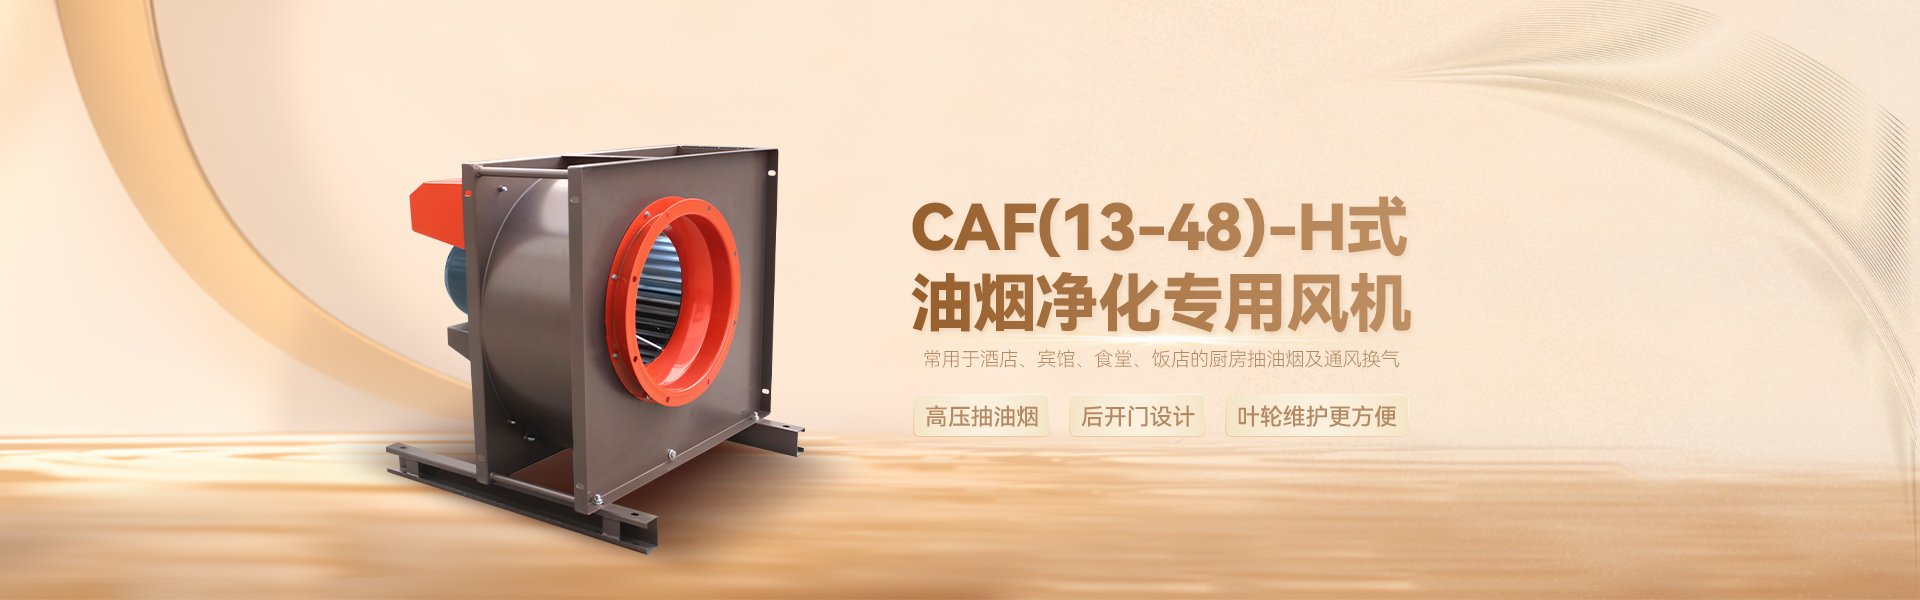 CAF(13-48)-H油烟净化专用风机